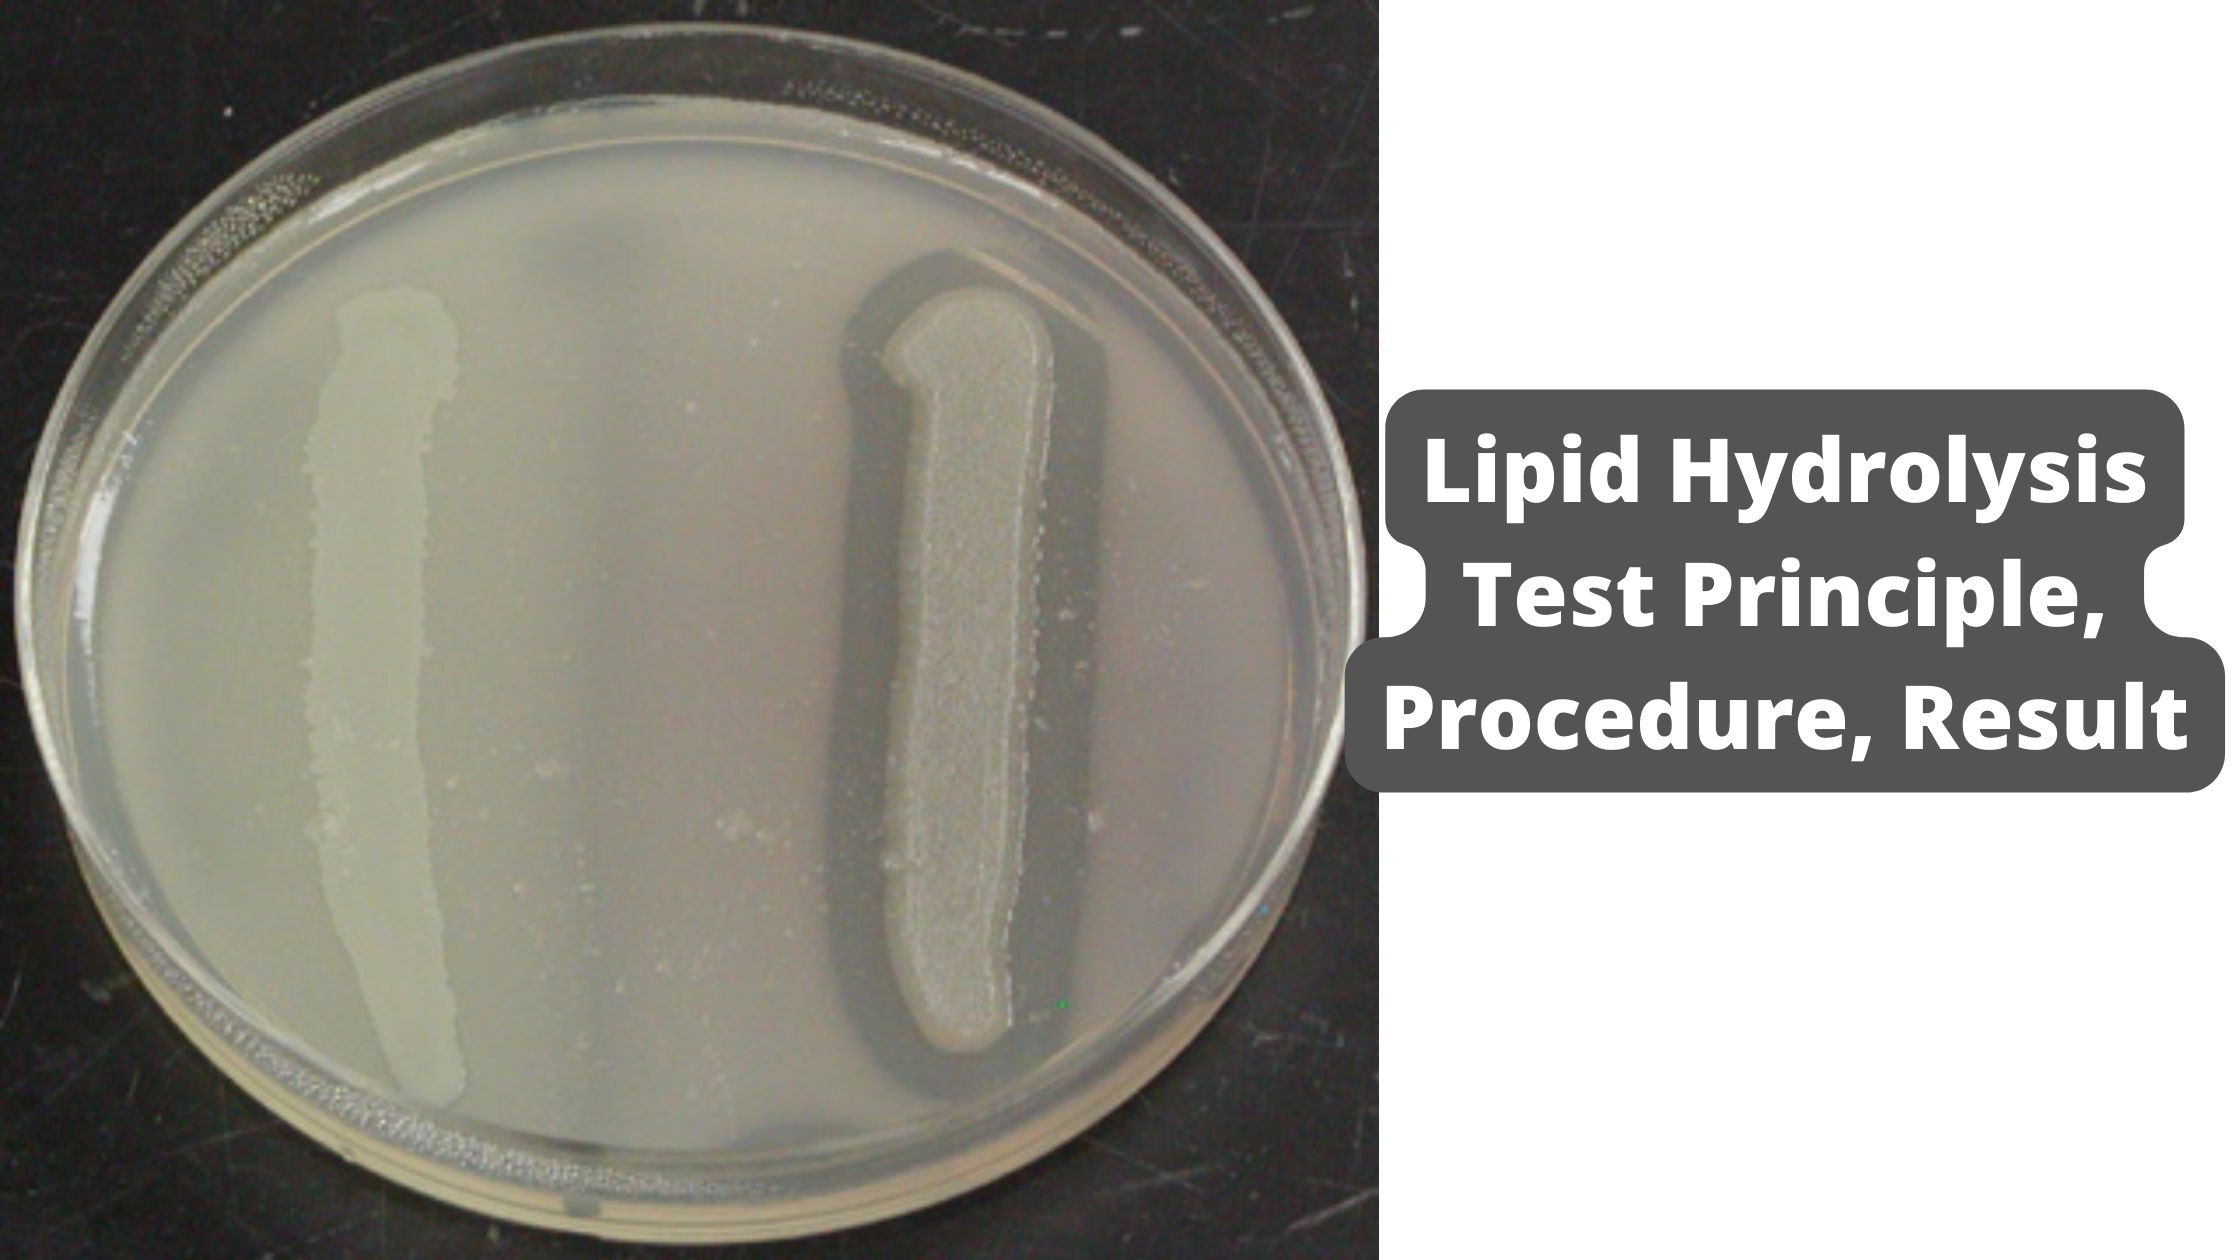 Lipid Hydrolysis Test Principle, Procedure, Result